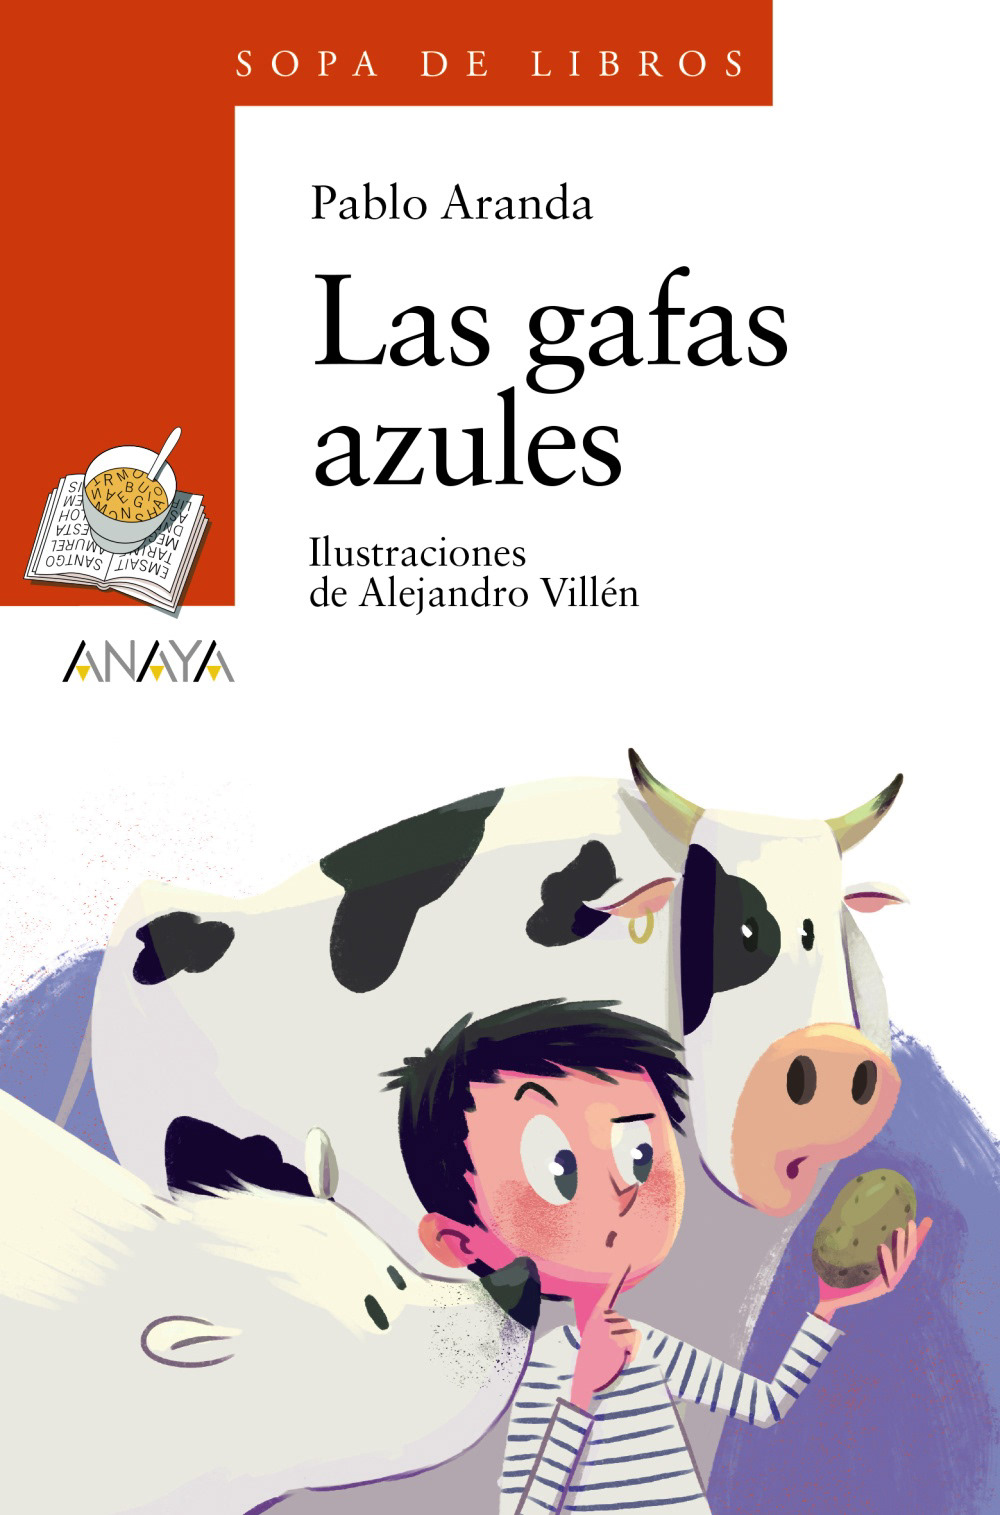 anaya childen's book Gafas azules ilustration Pablo Aranda